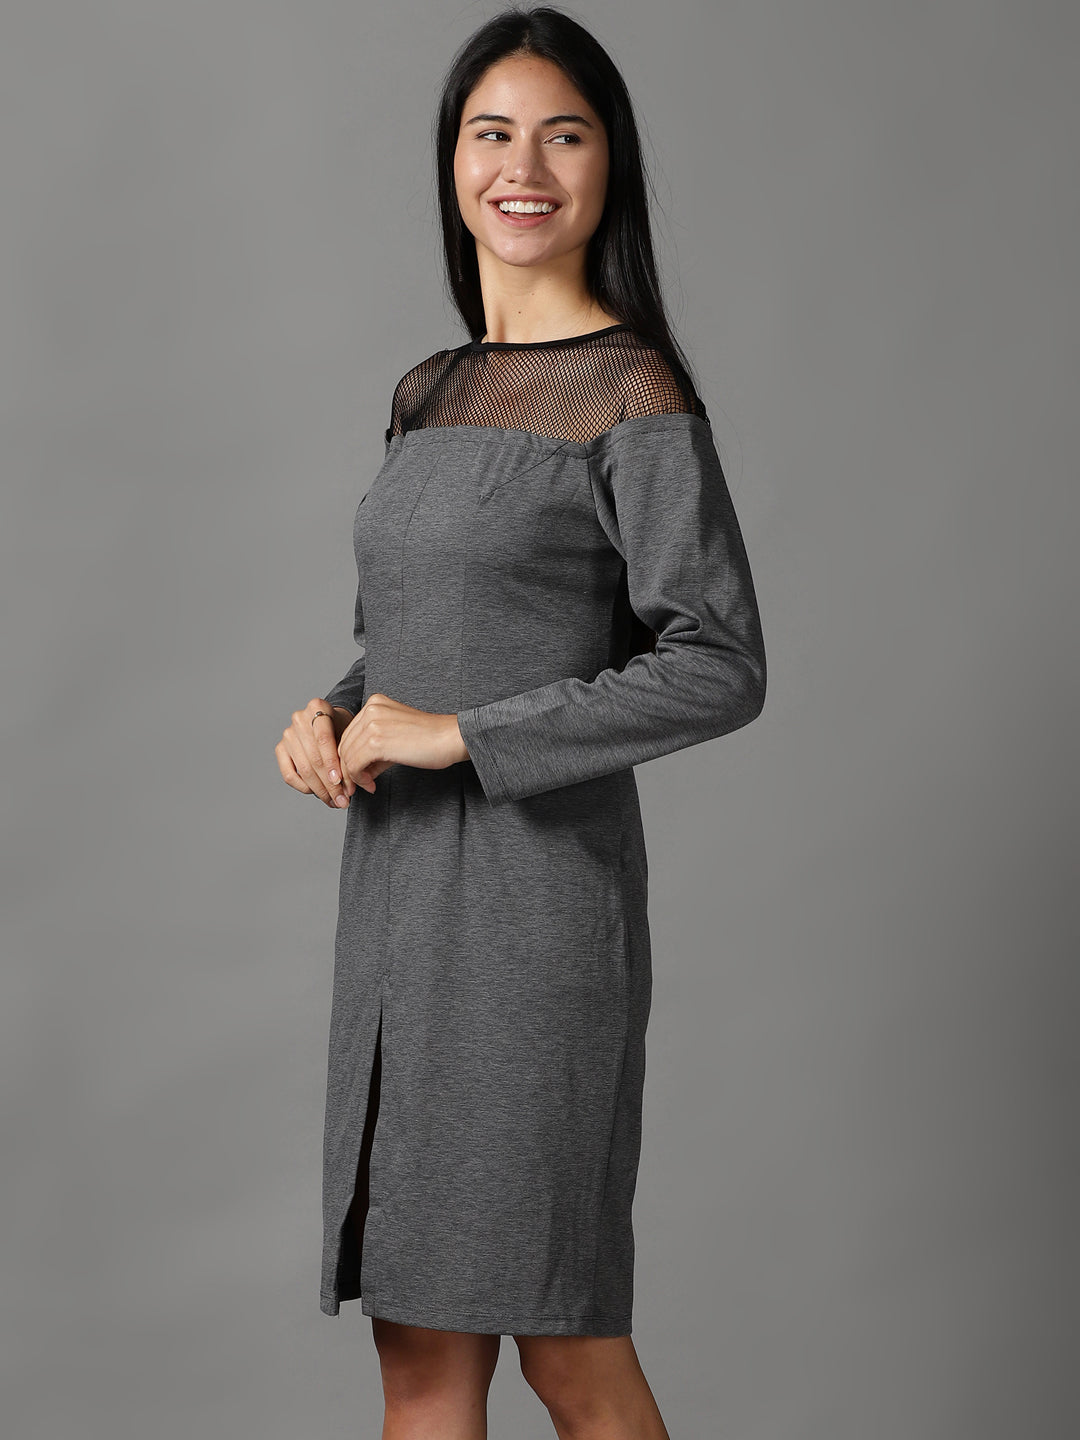 Women's Grey Solid Bodycon Dress